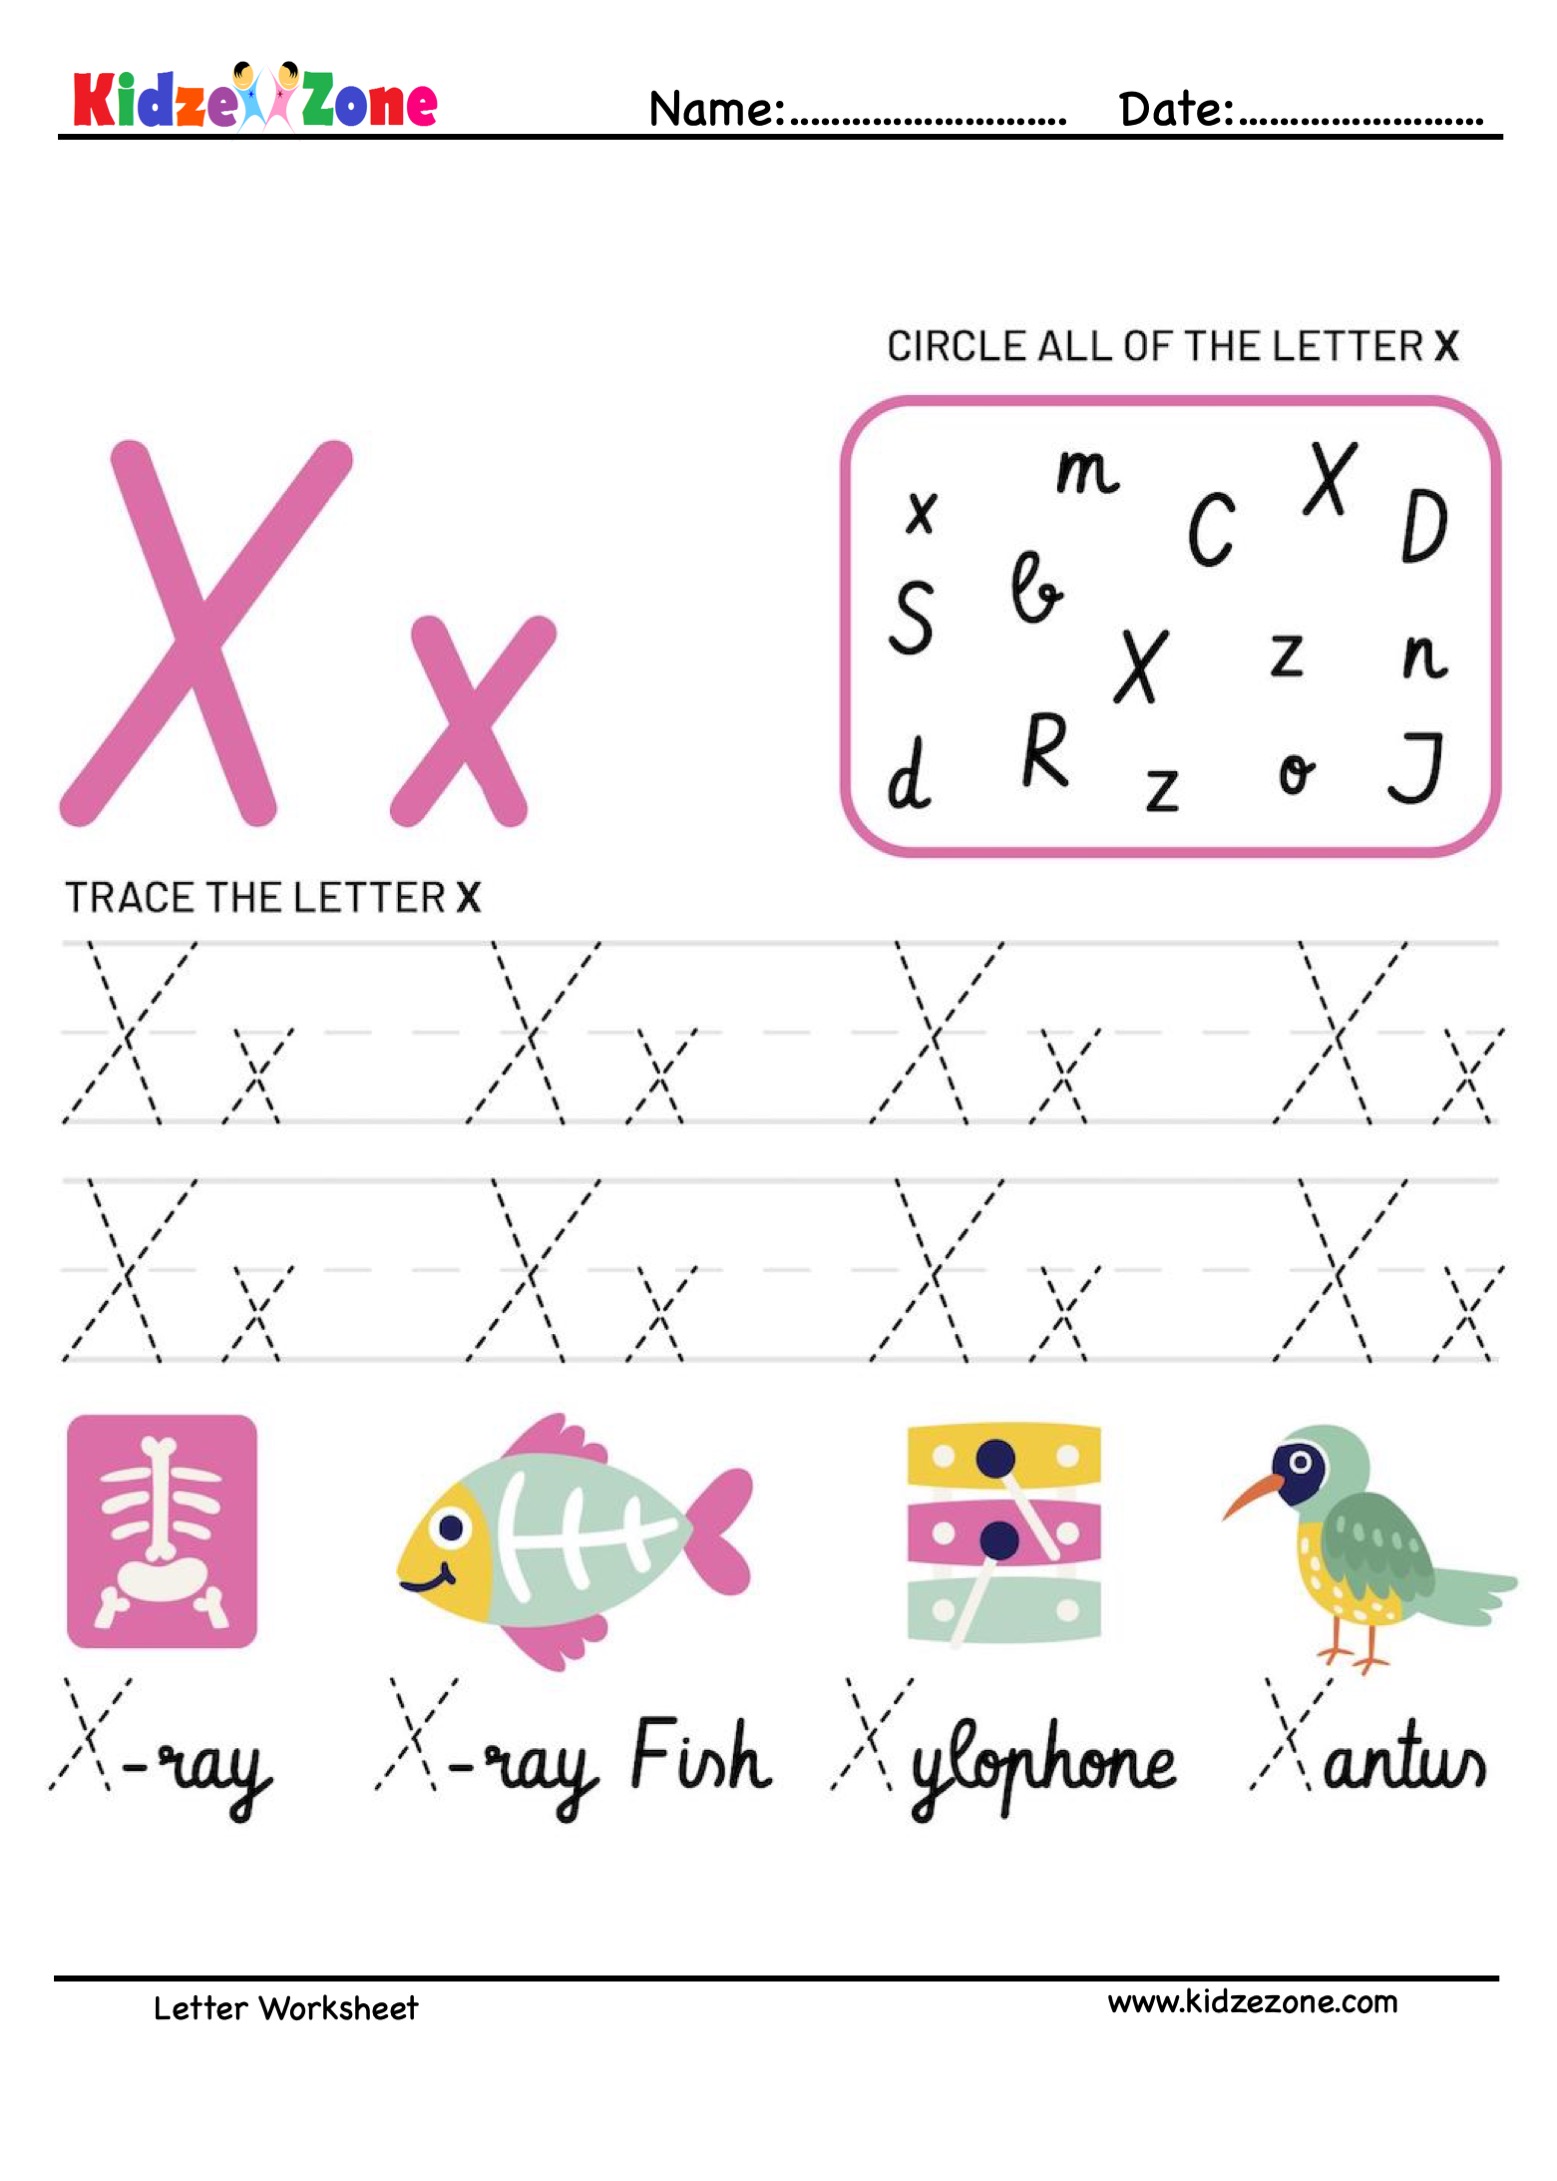 letter-x-worksheets-for-kids-online-splashlearn-free-letter-x-tracing